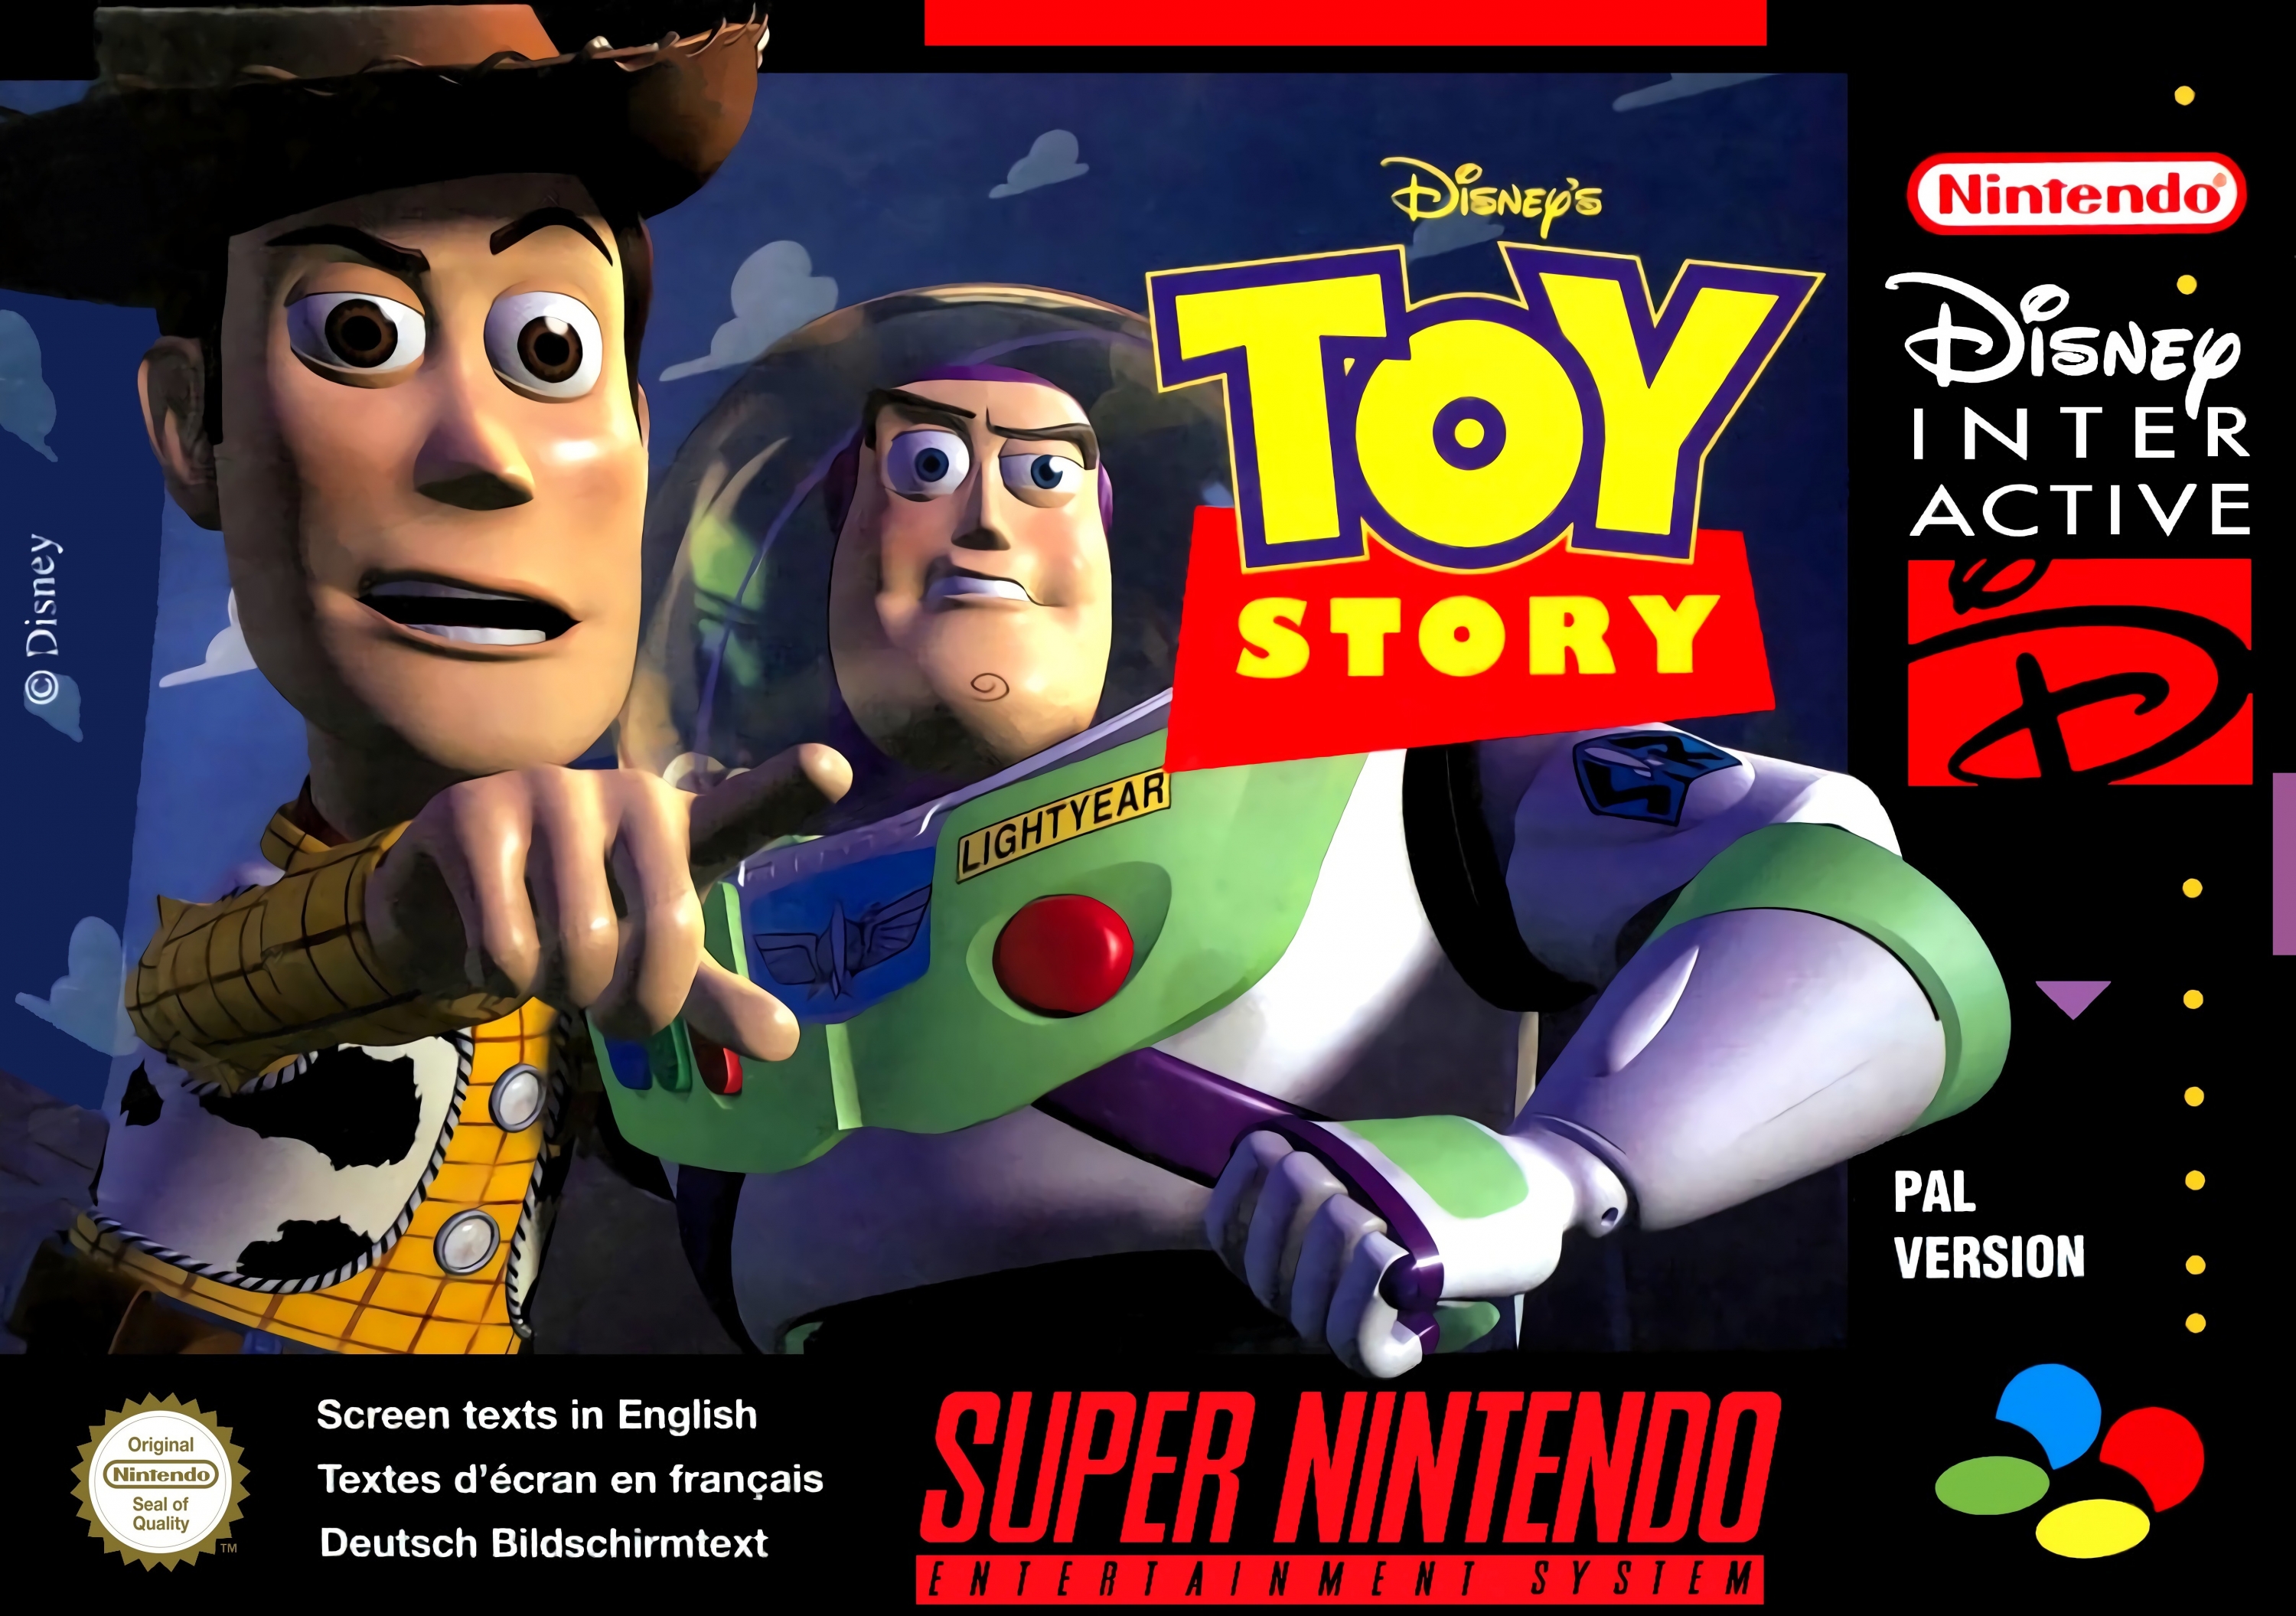 Disney's Toy Story 